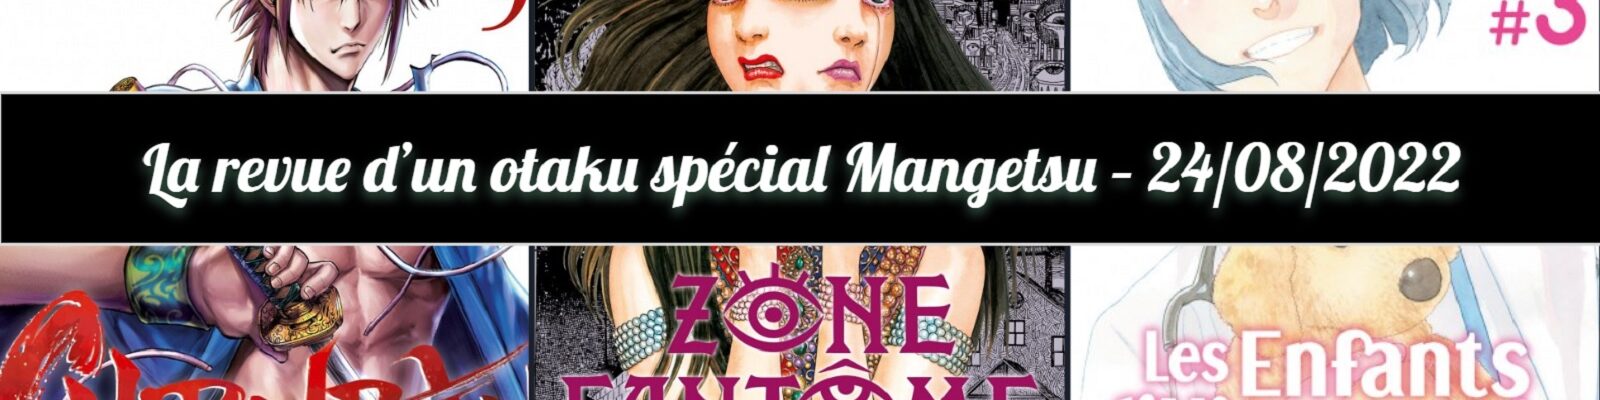 Mangetsu - Zone Fantôme